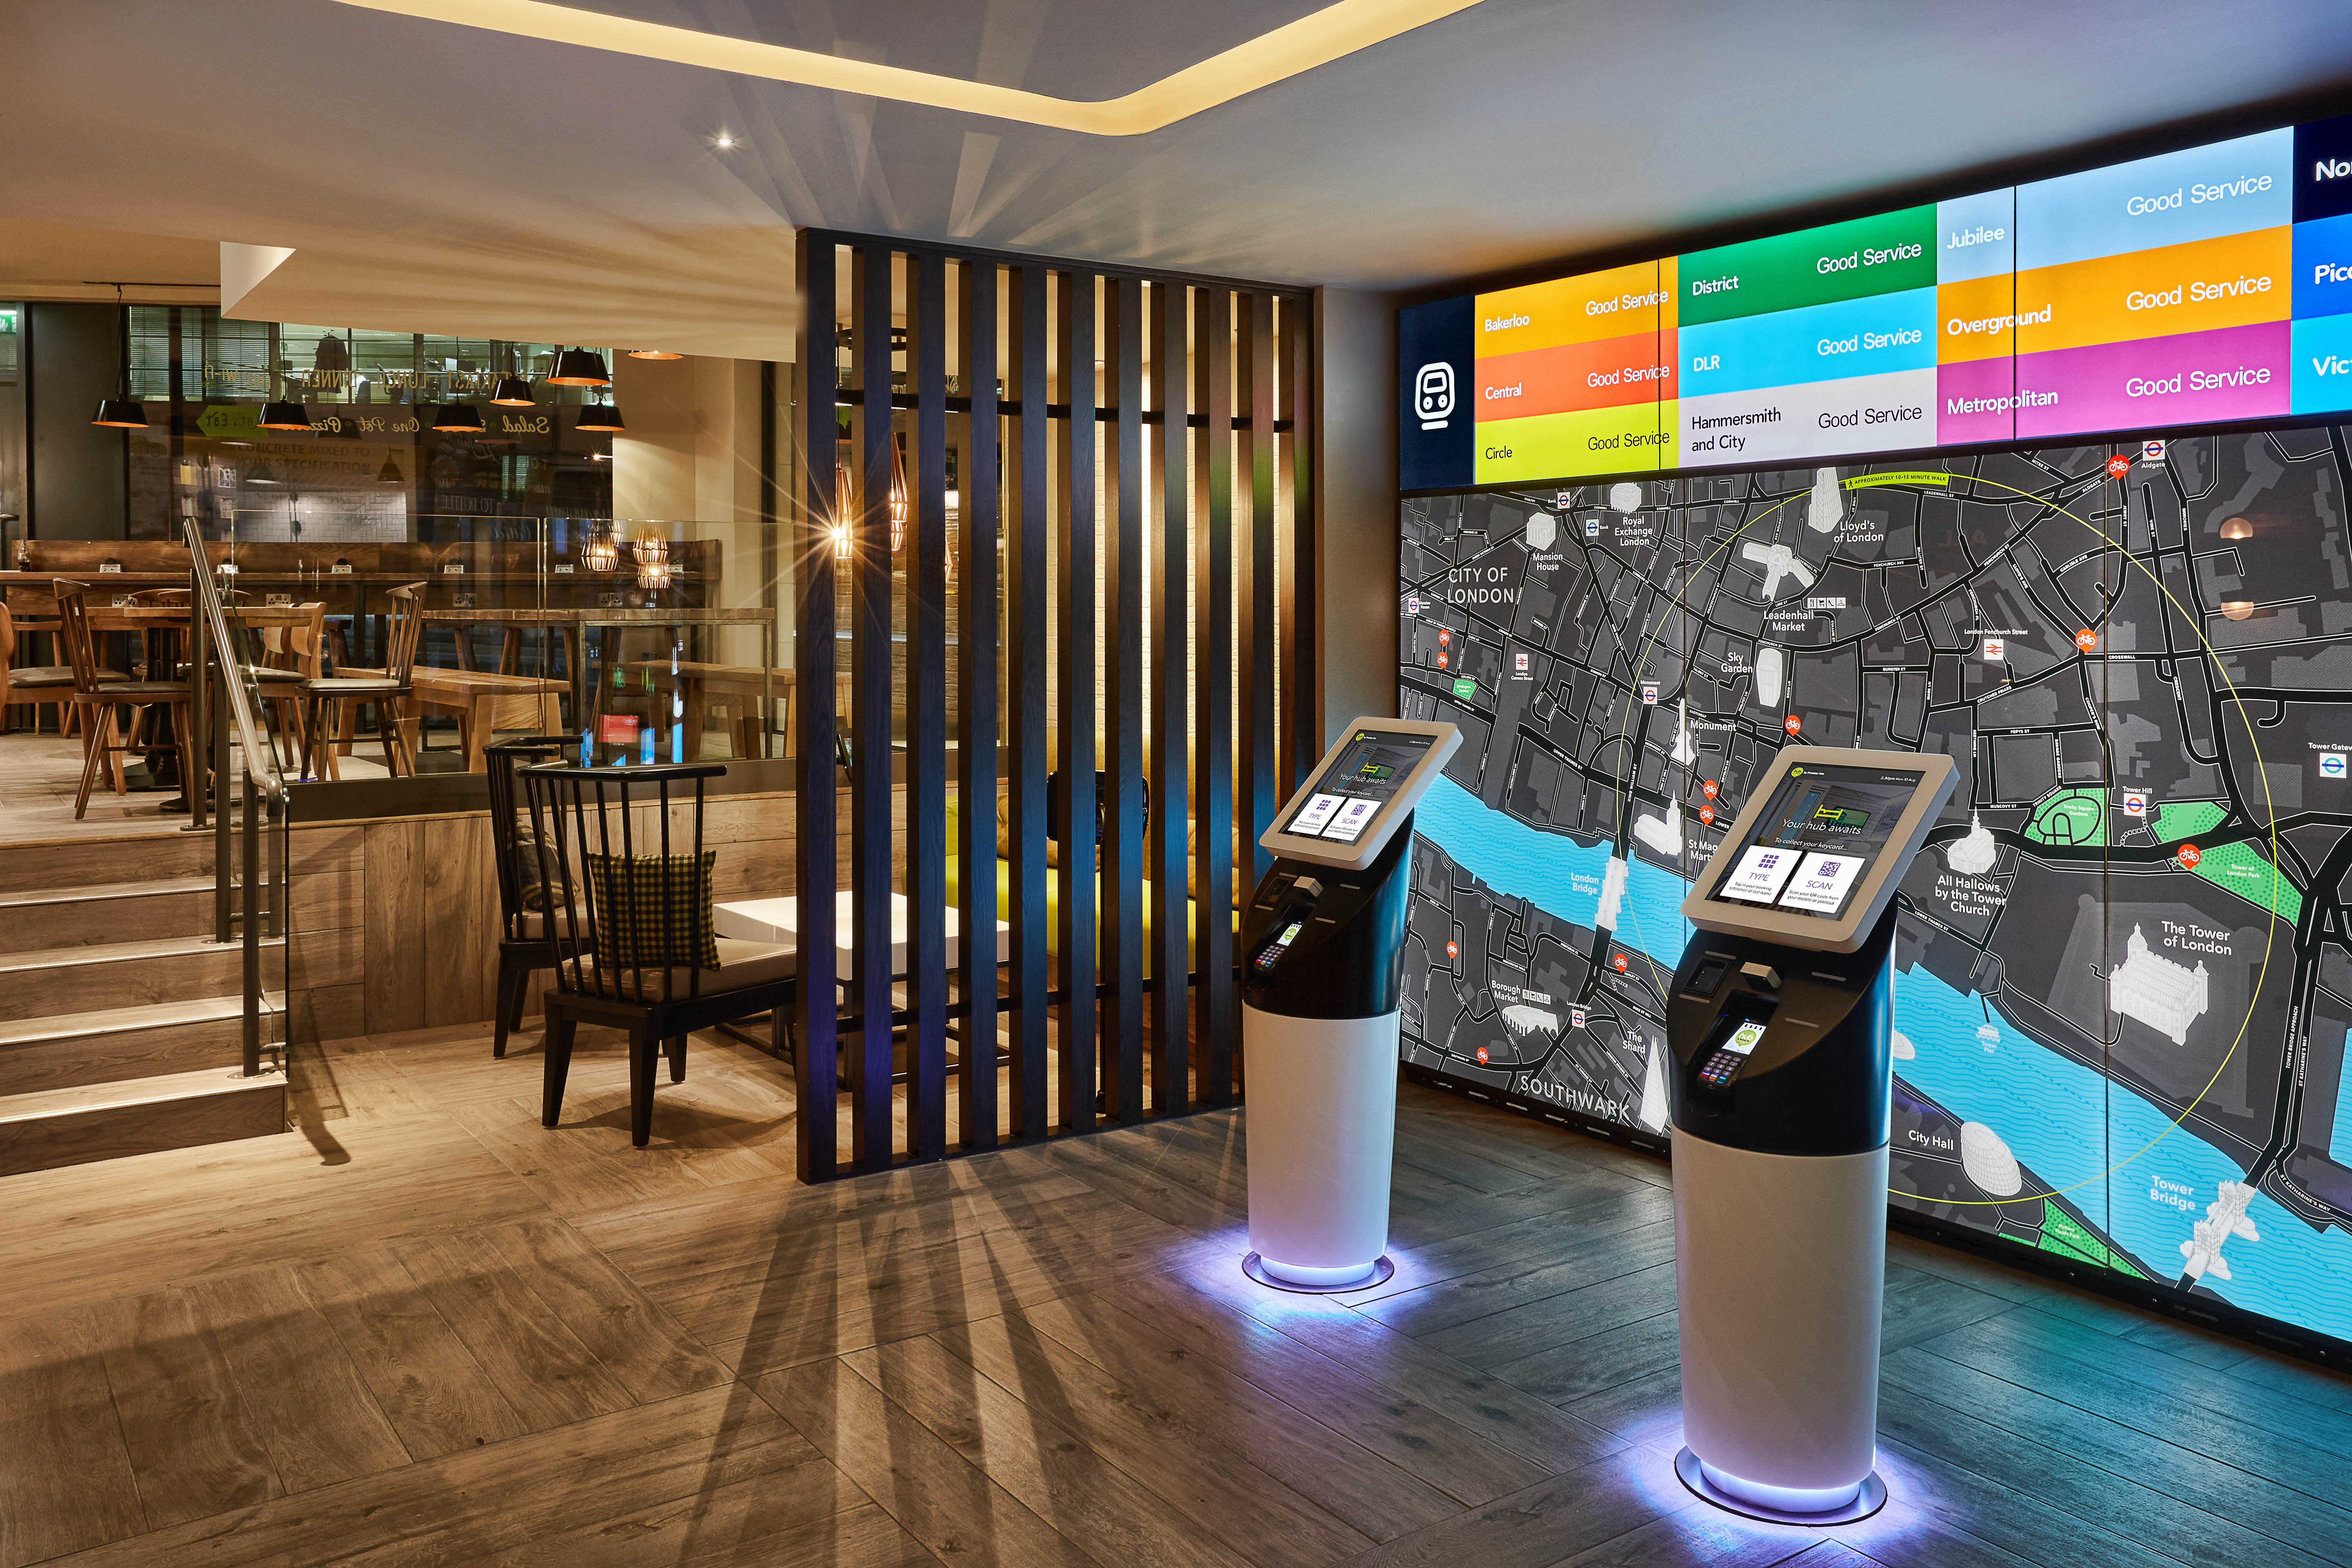 Images hub by Premier Inn London Tower Bridge hotel